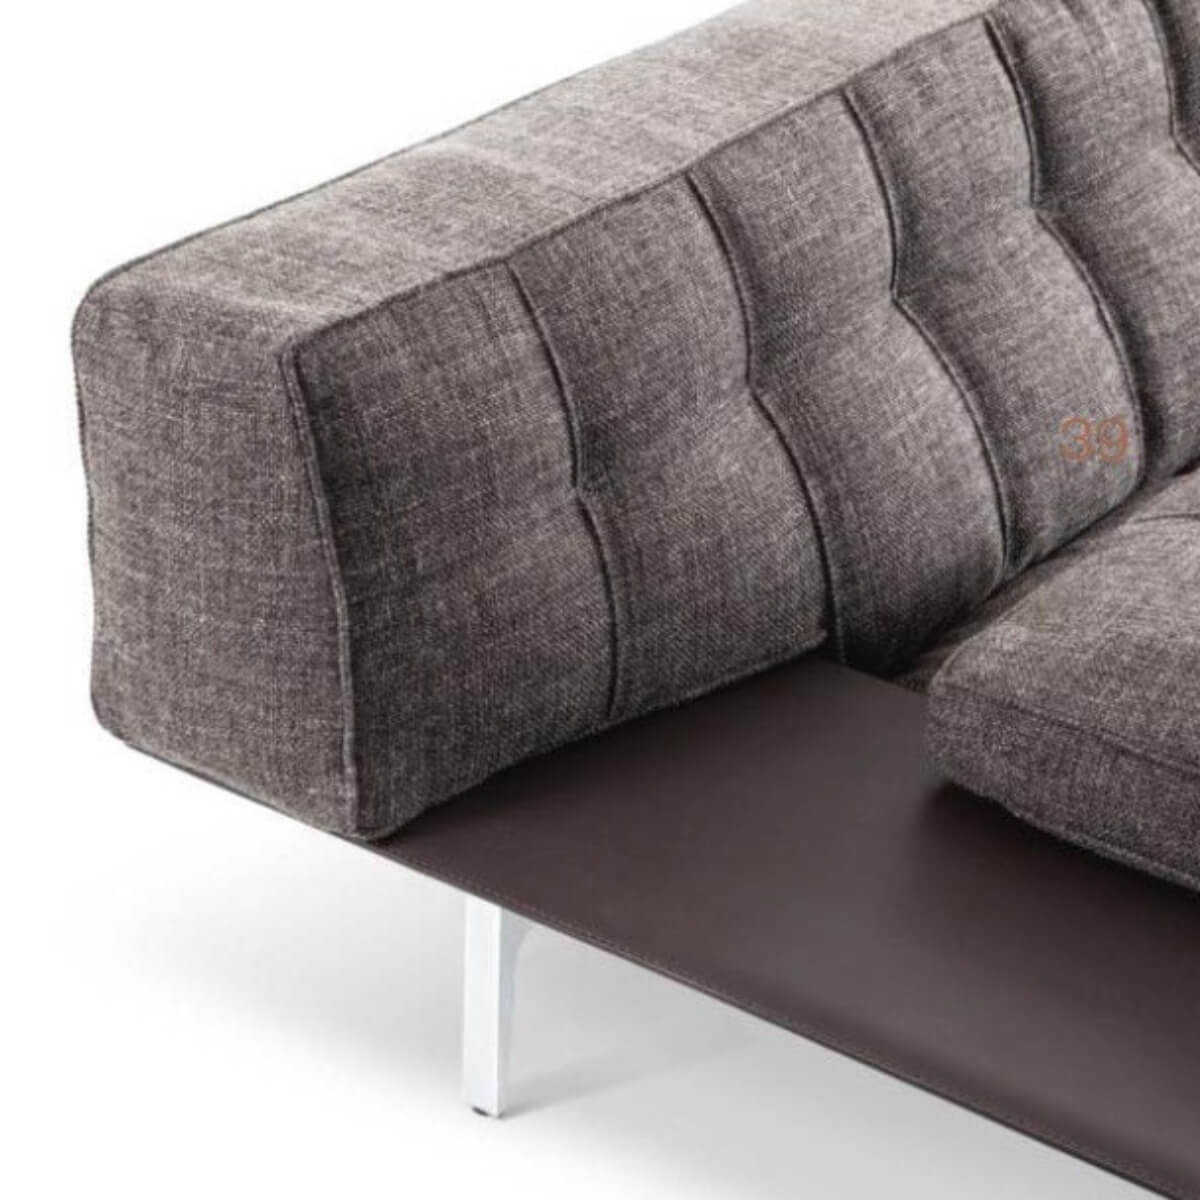 DreamWeave Divinity Cotton Linen Sofa: A Sofa of Infinite Possibilities